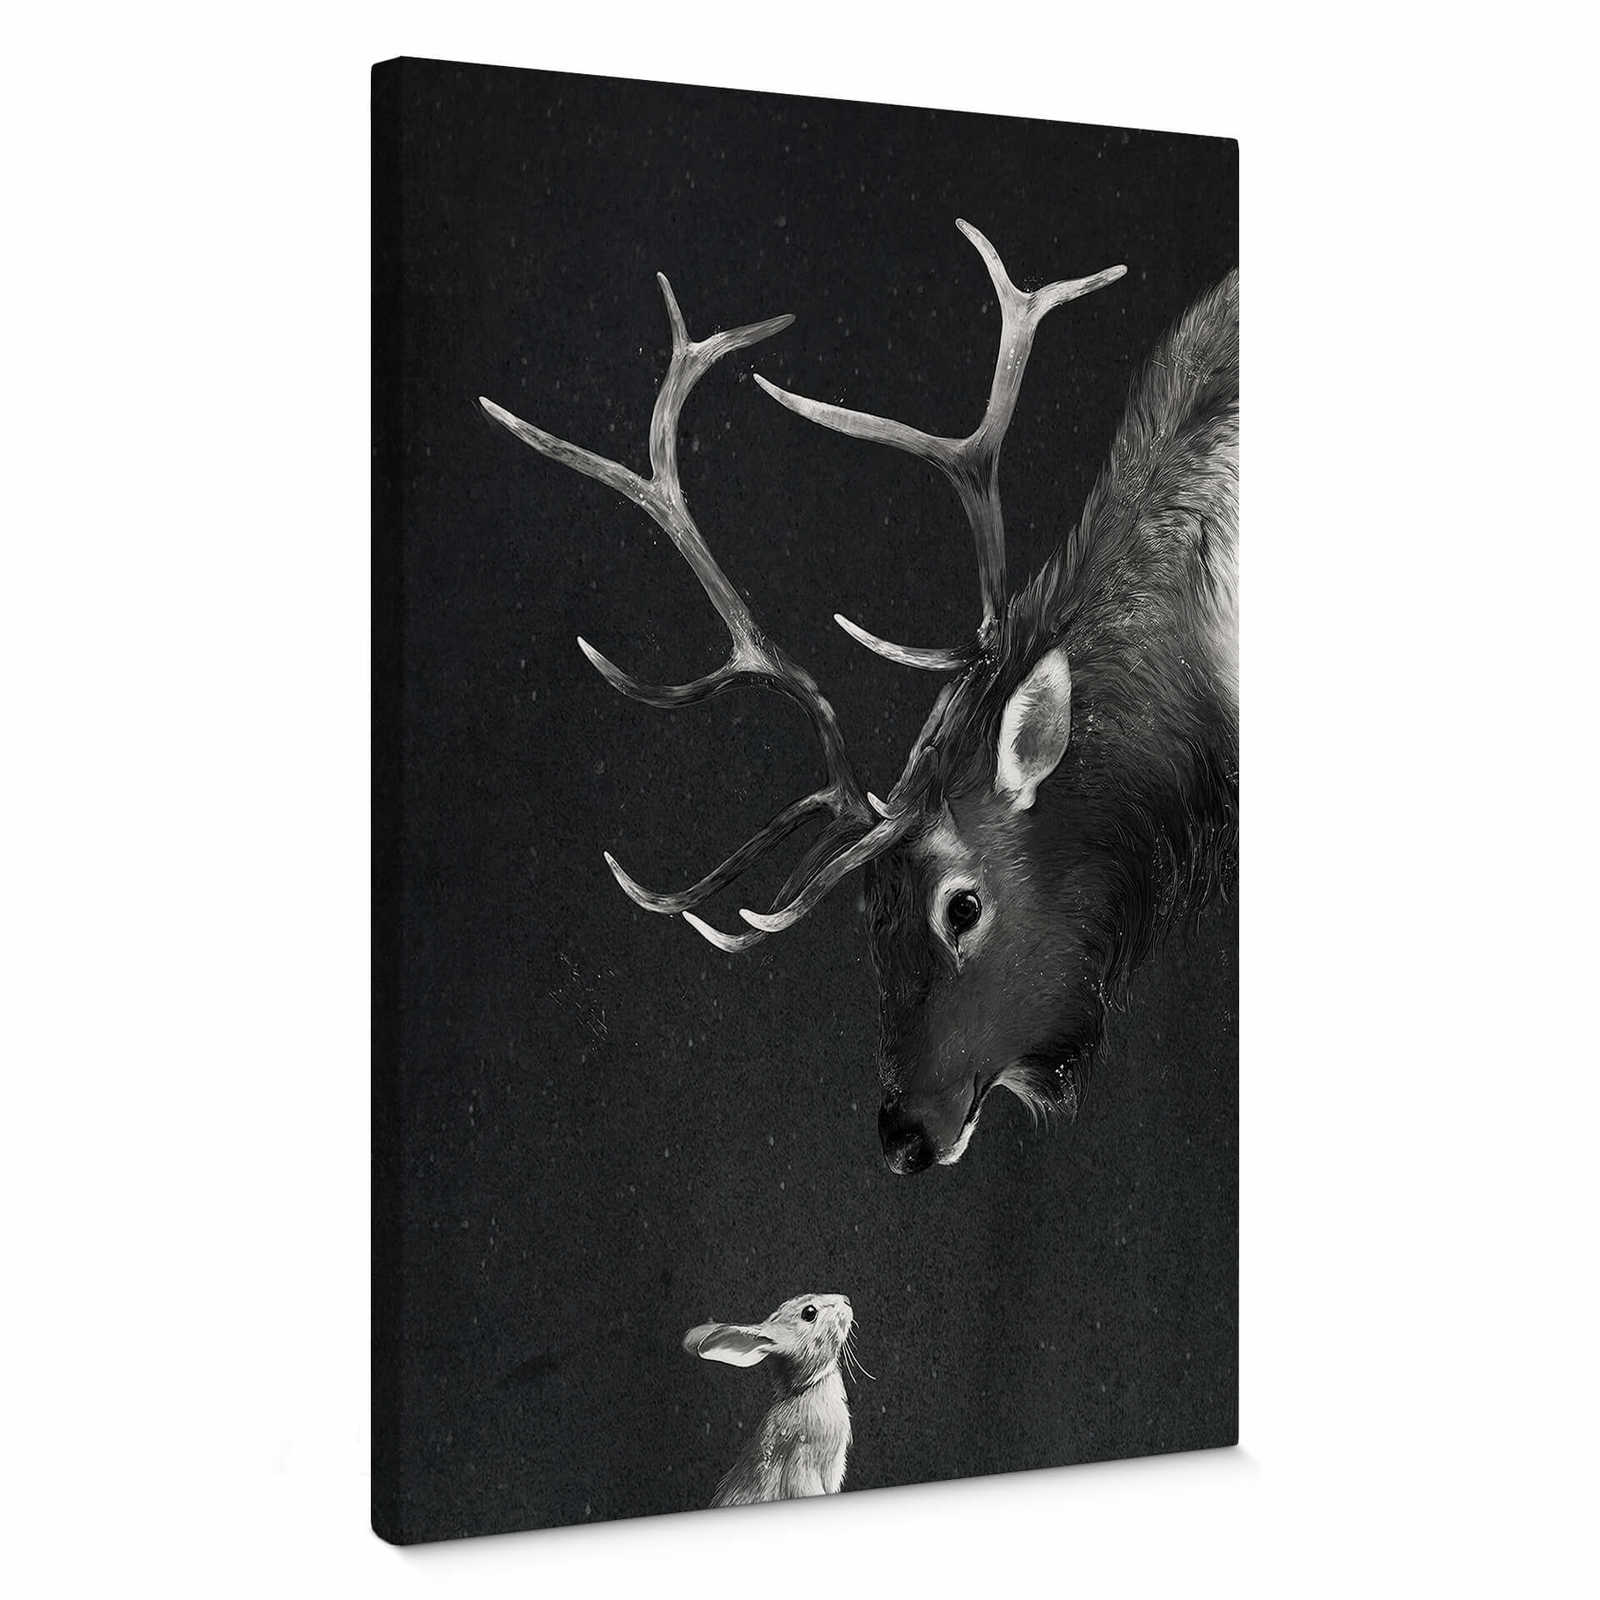         Graves Canvas print "Deer & Rabbit" – black and white
    